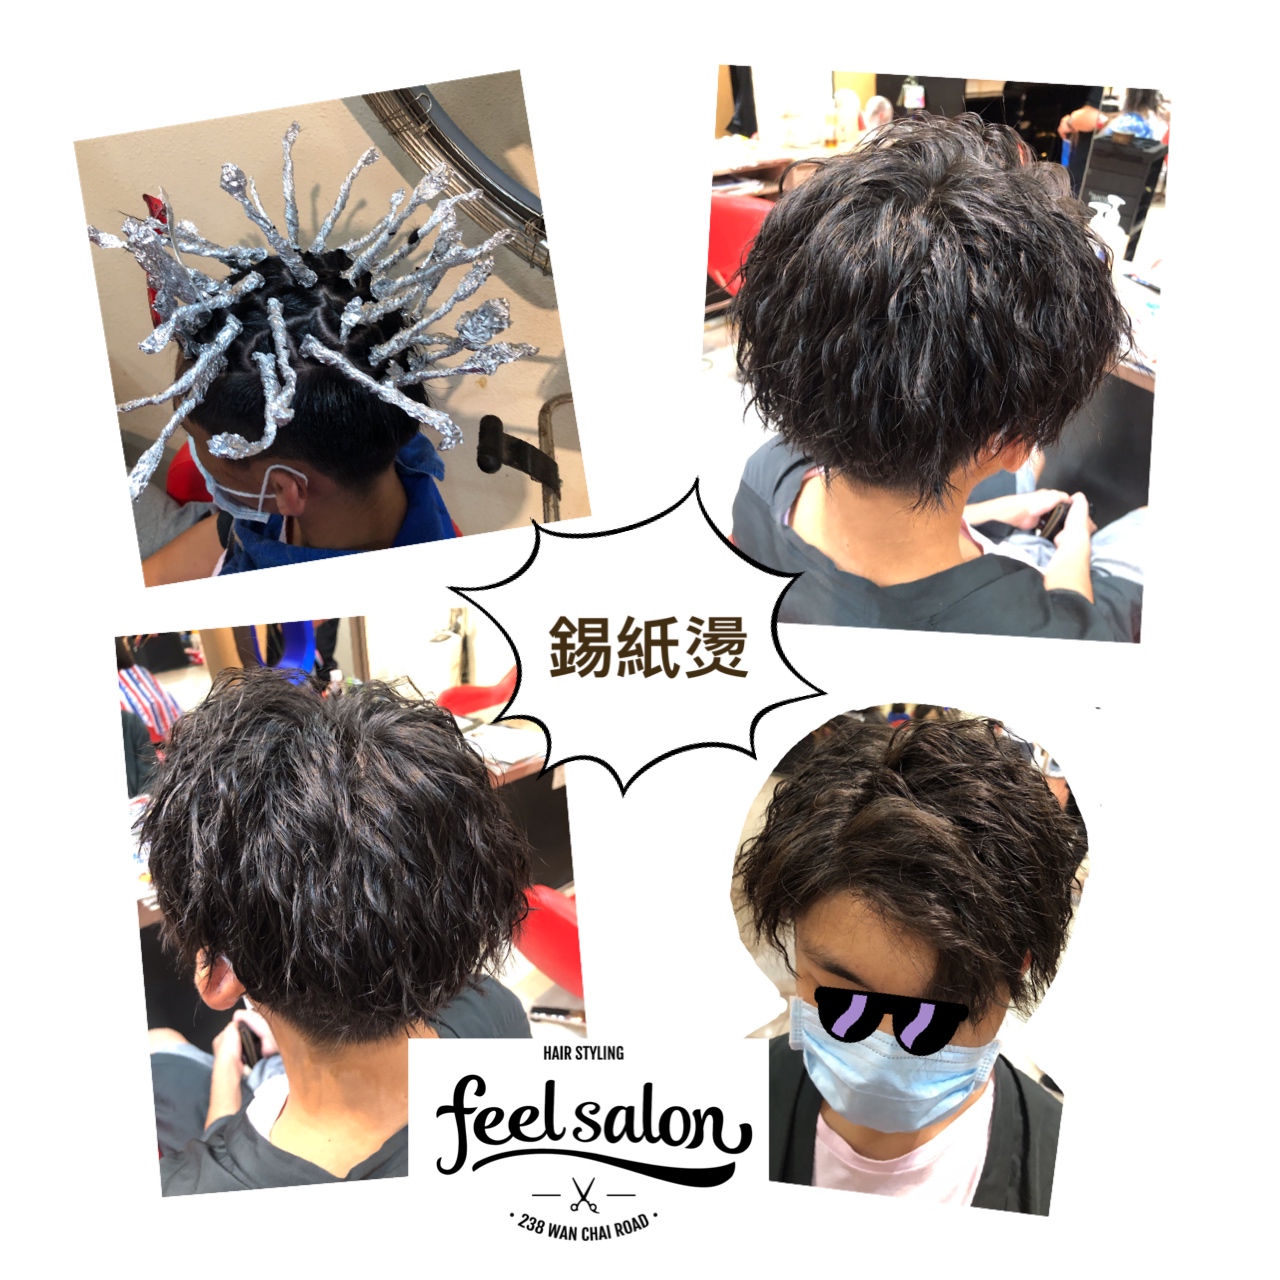 Feel Salon之髮型作品: 錫紙燙